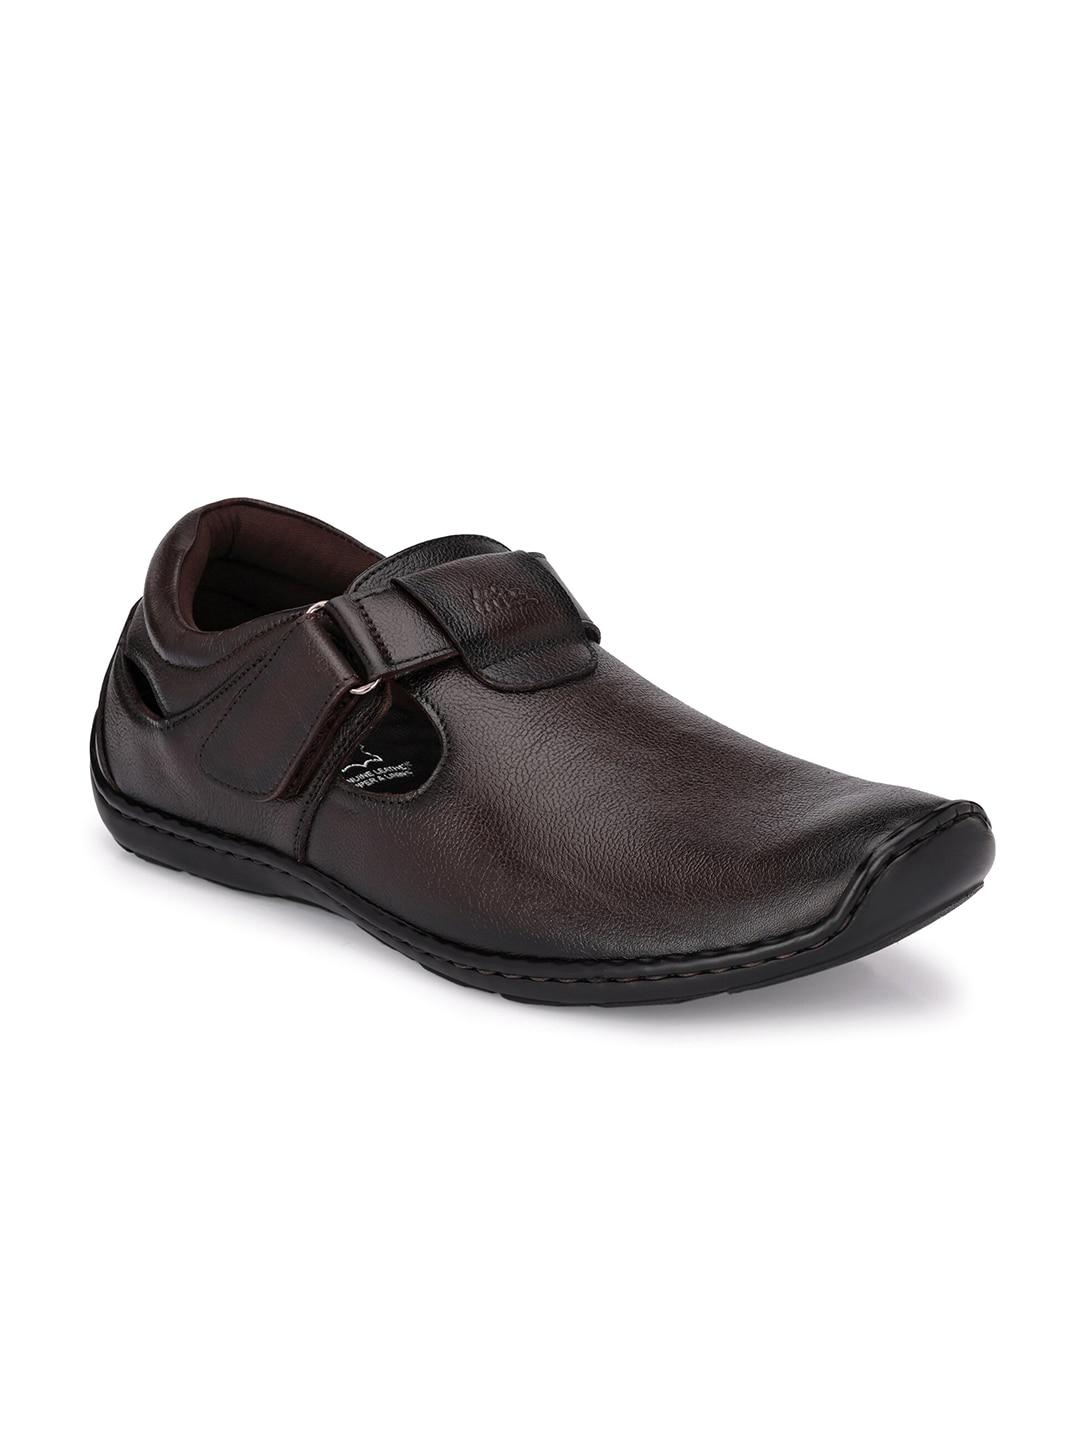 hitz-men-brown-leather-shoe-style-sandals